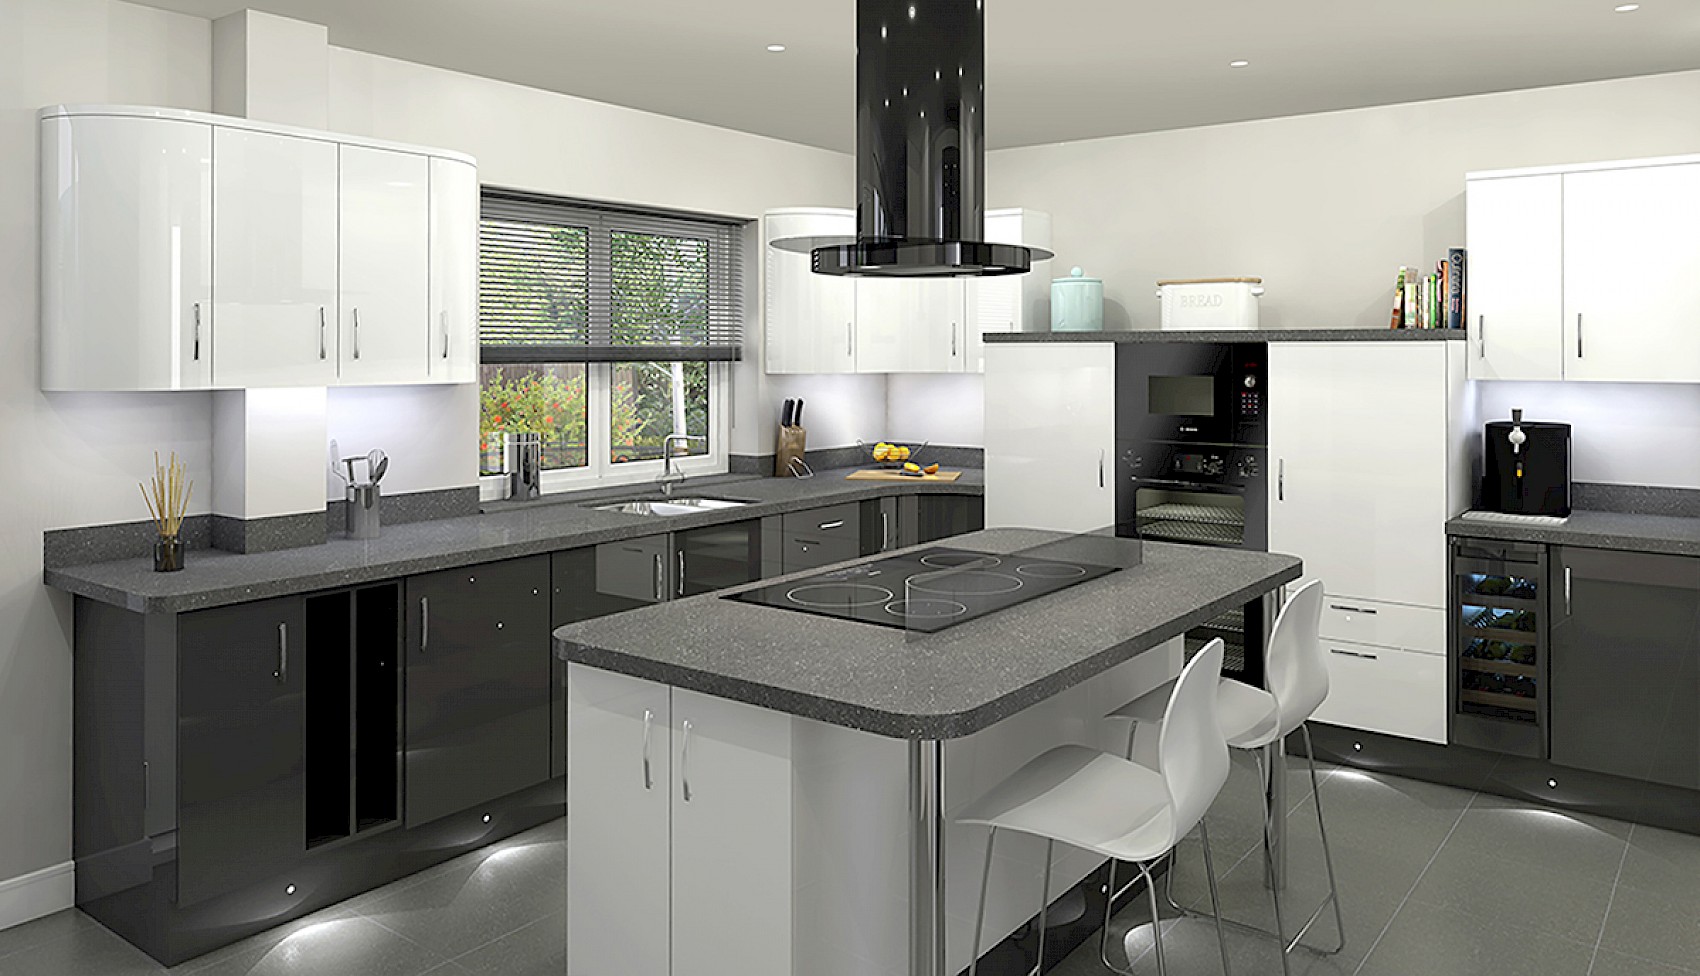 Photo realistic rendering of kitchen interior